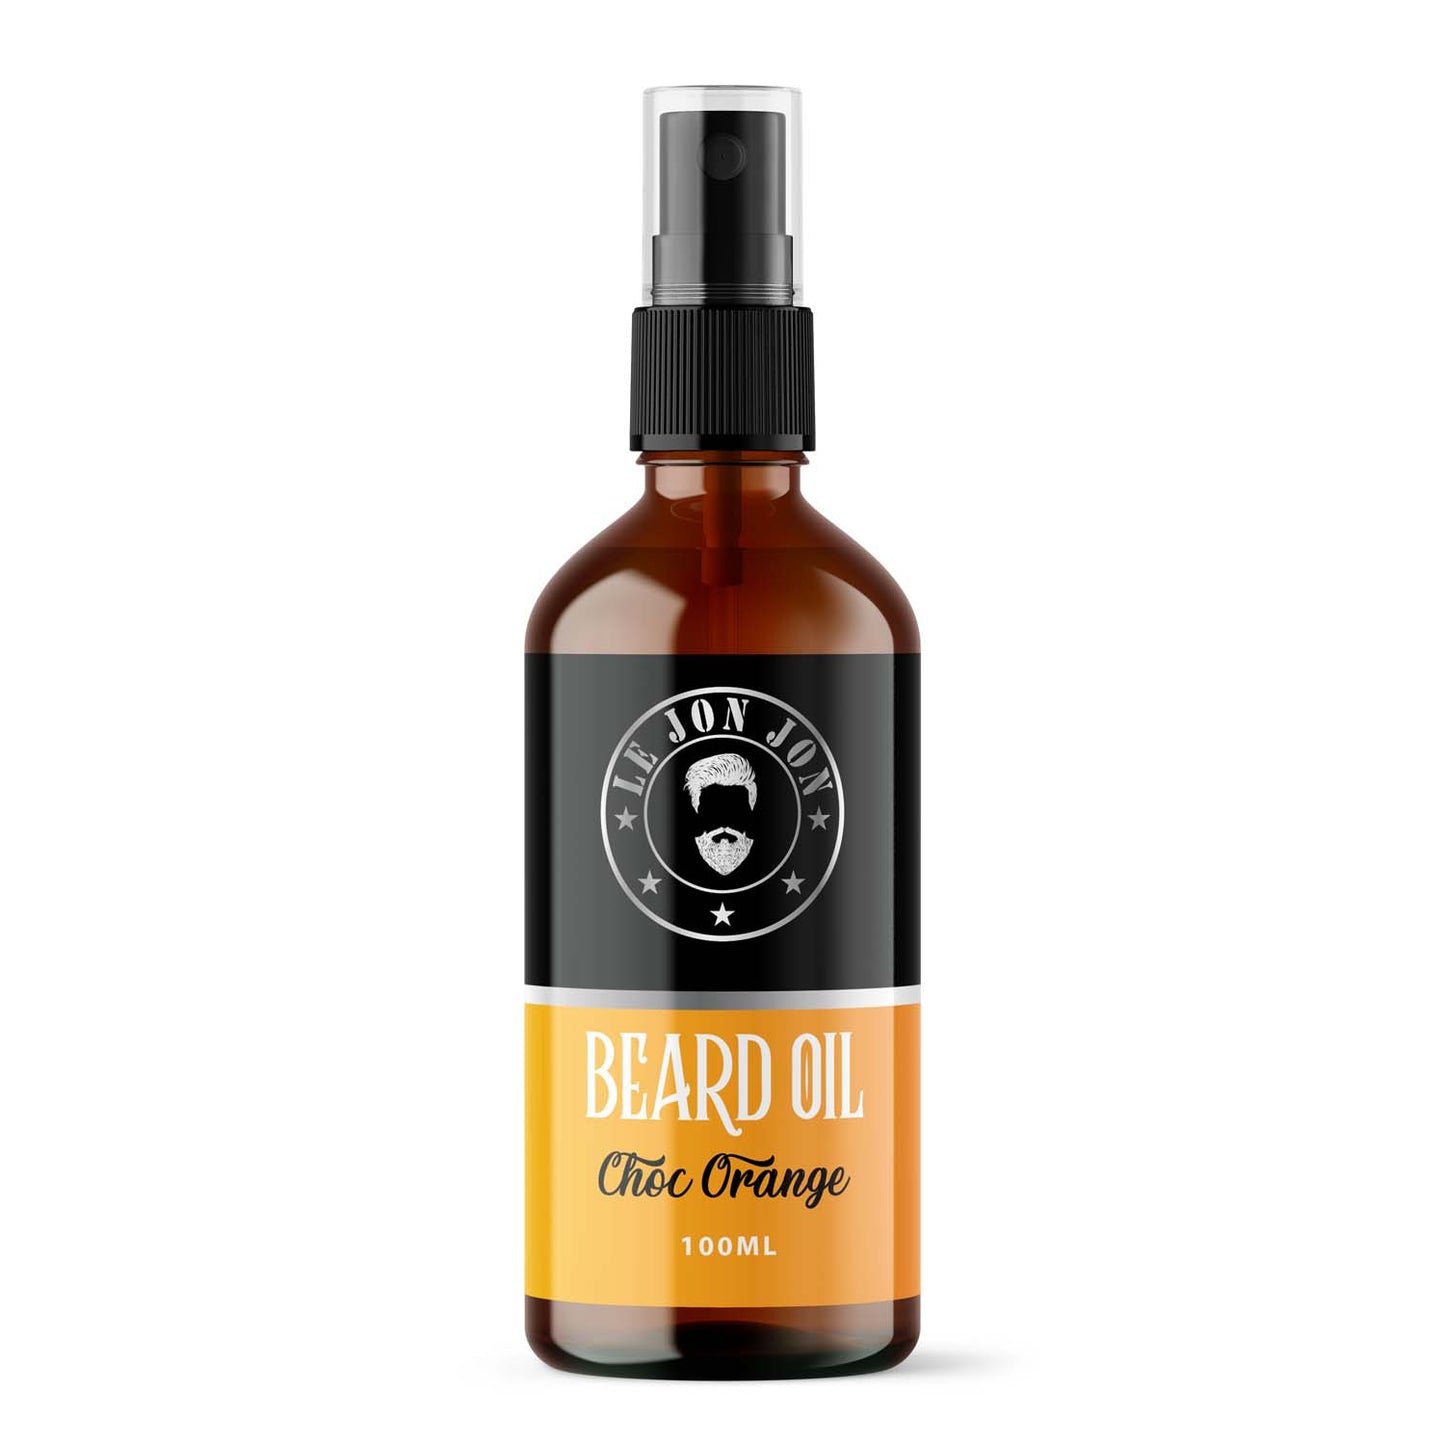 Choc orange 100ml bottle of beard oil